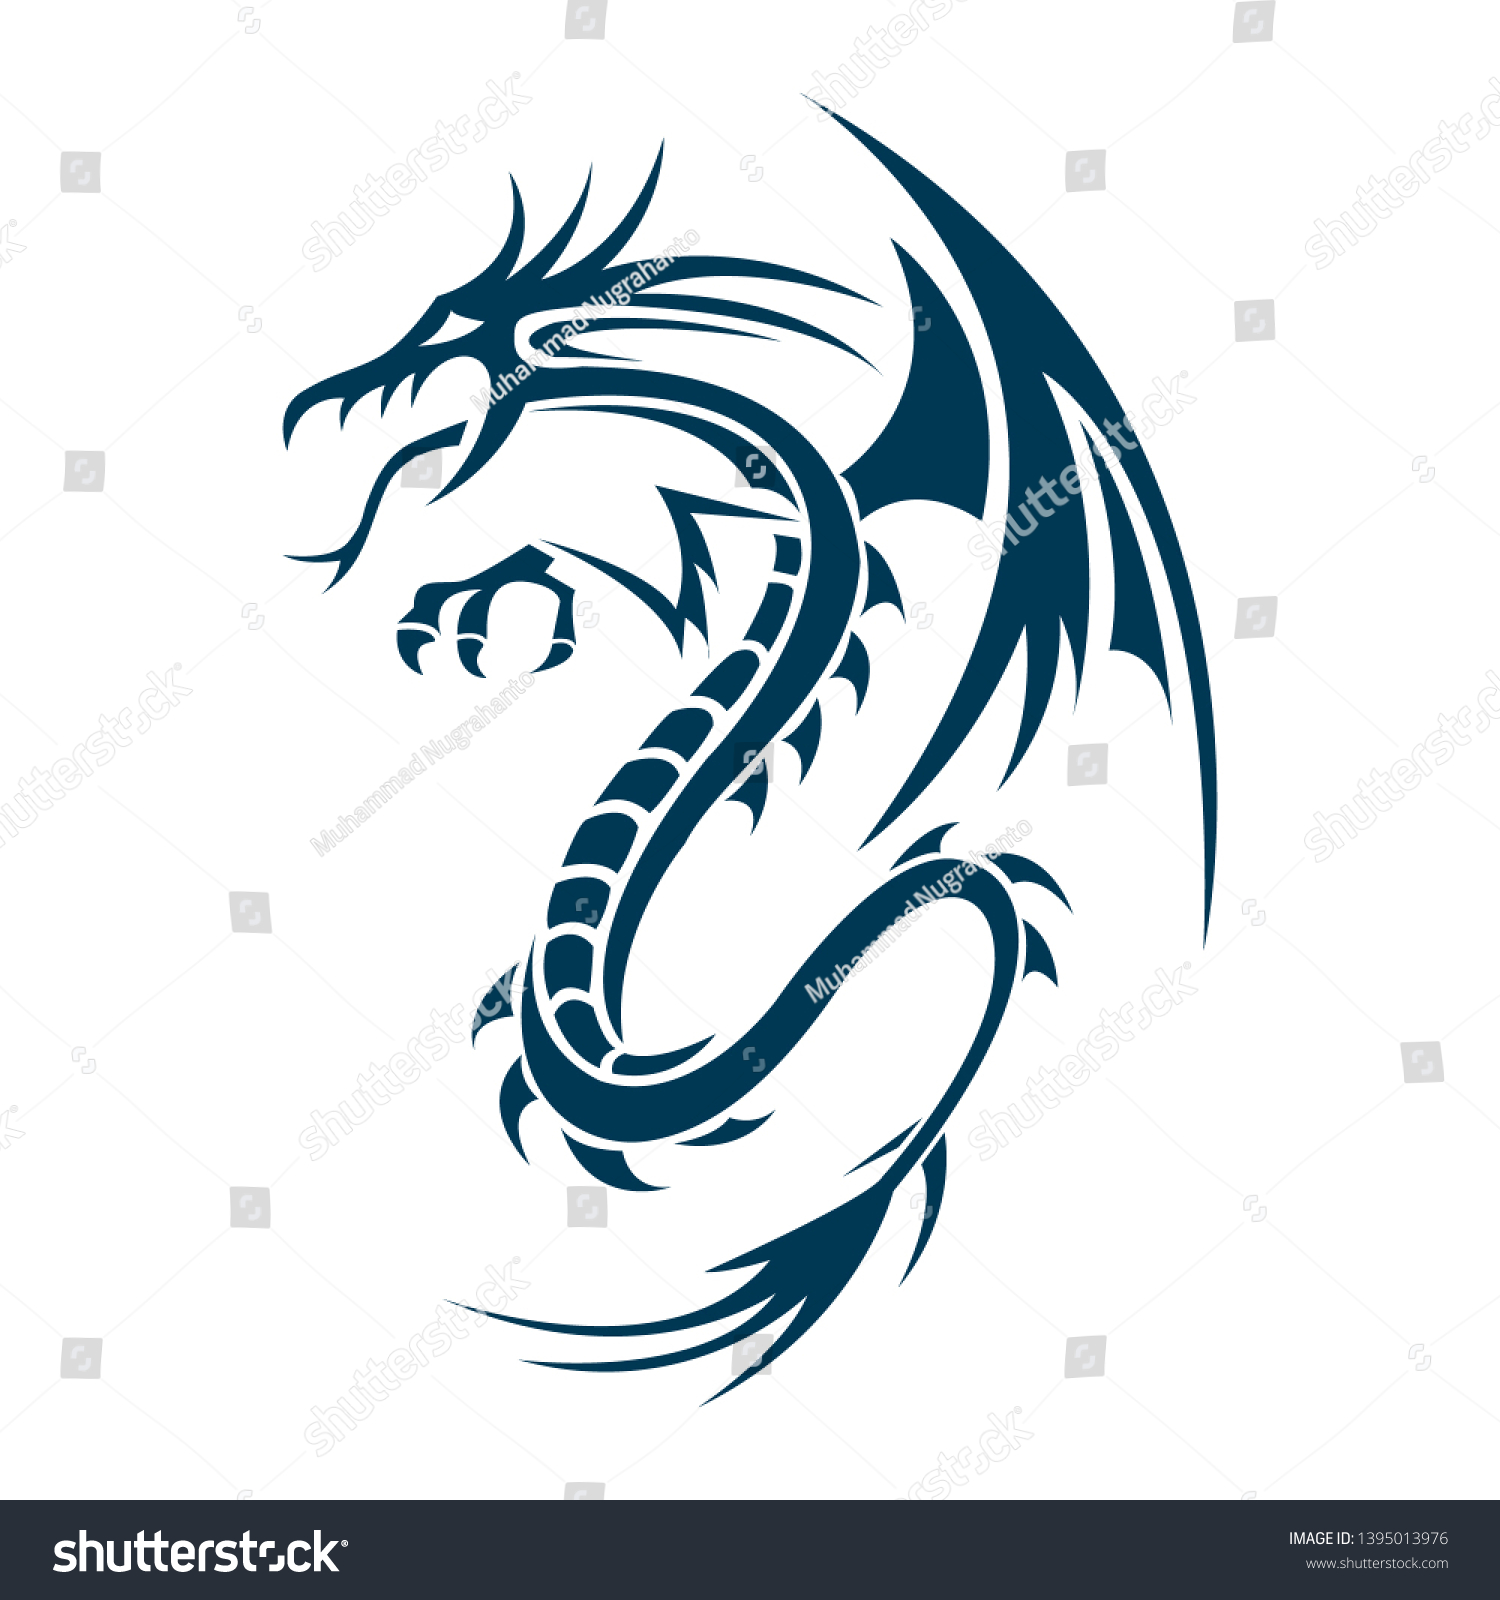 Dragon Logo Design Inspiration Your Company Stock Vector Royalty Free